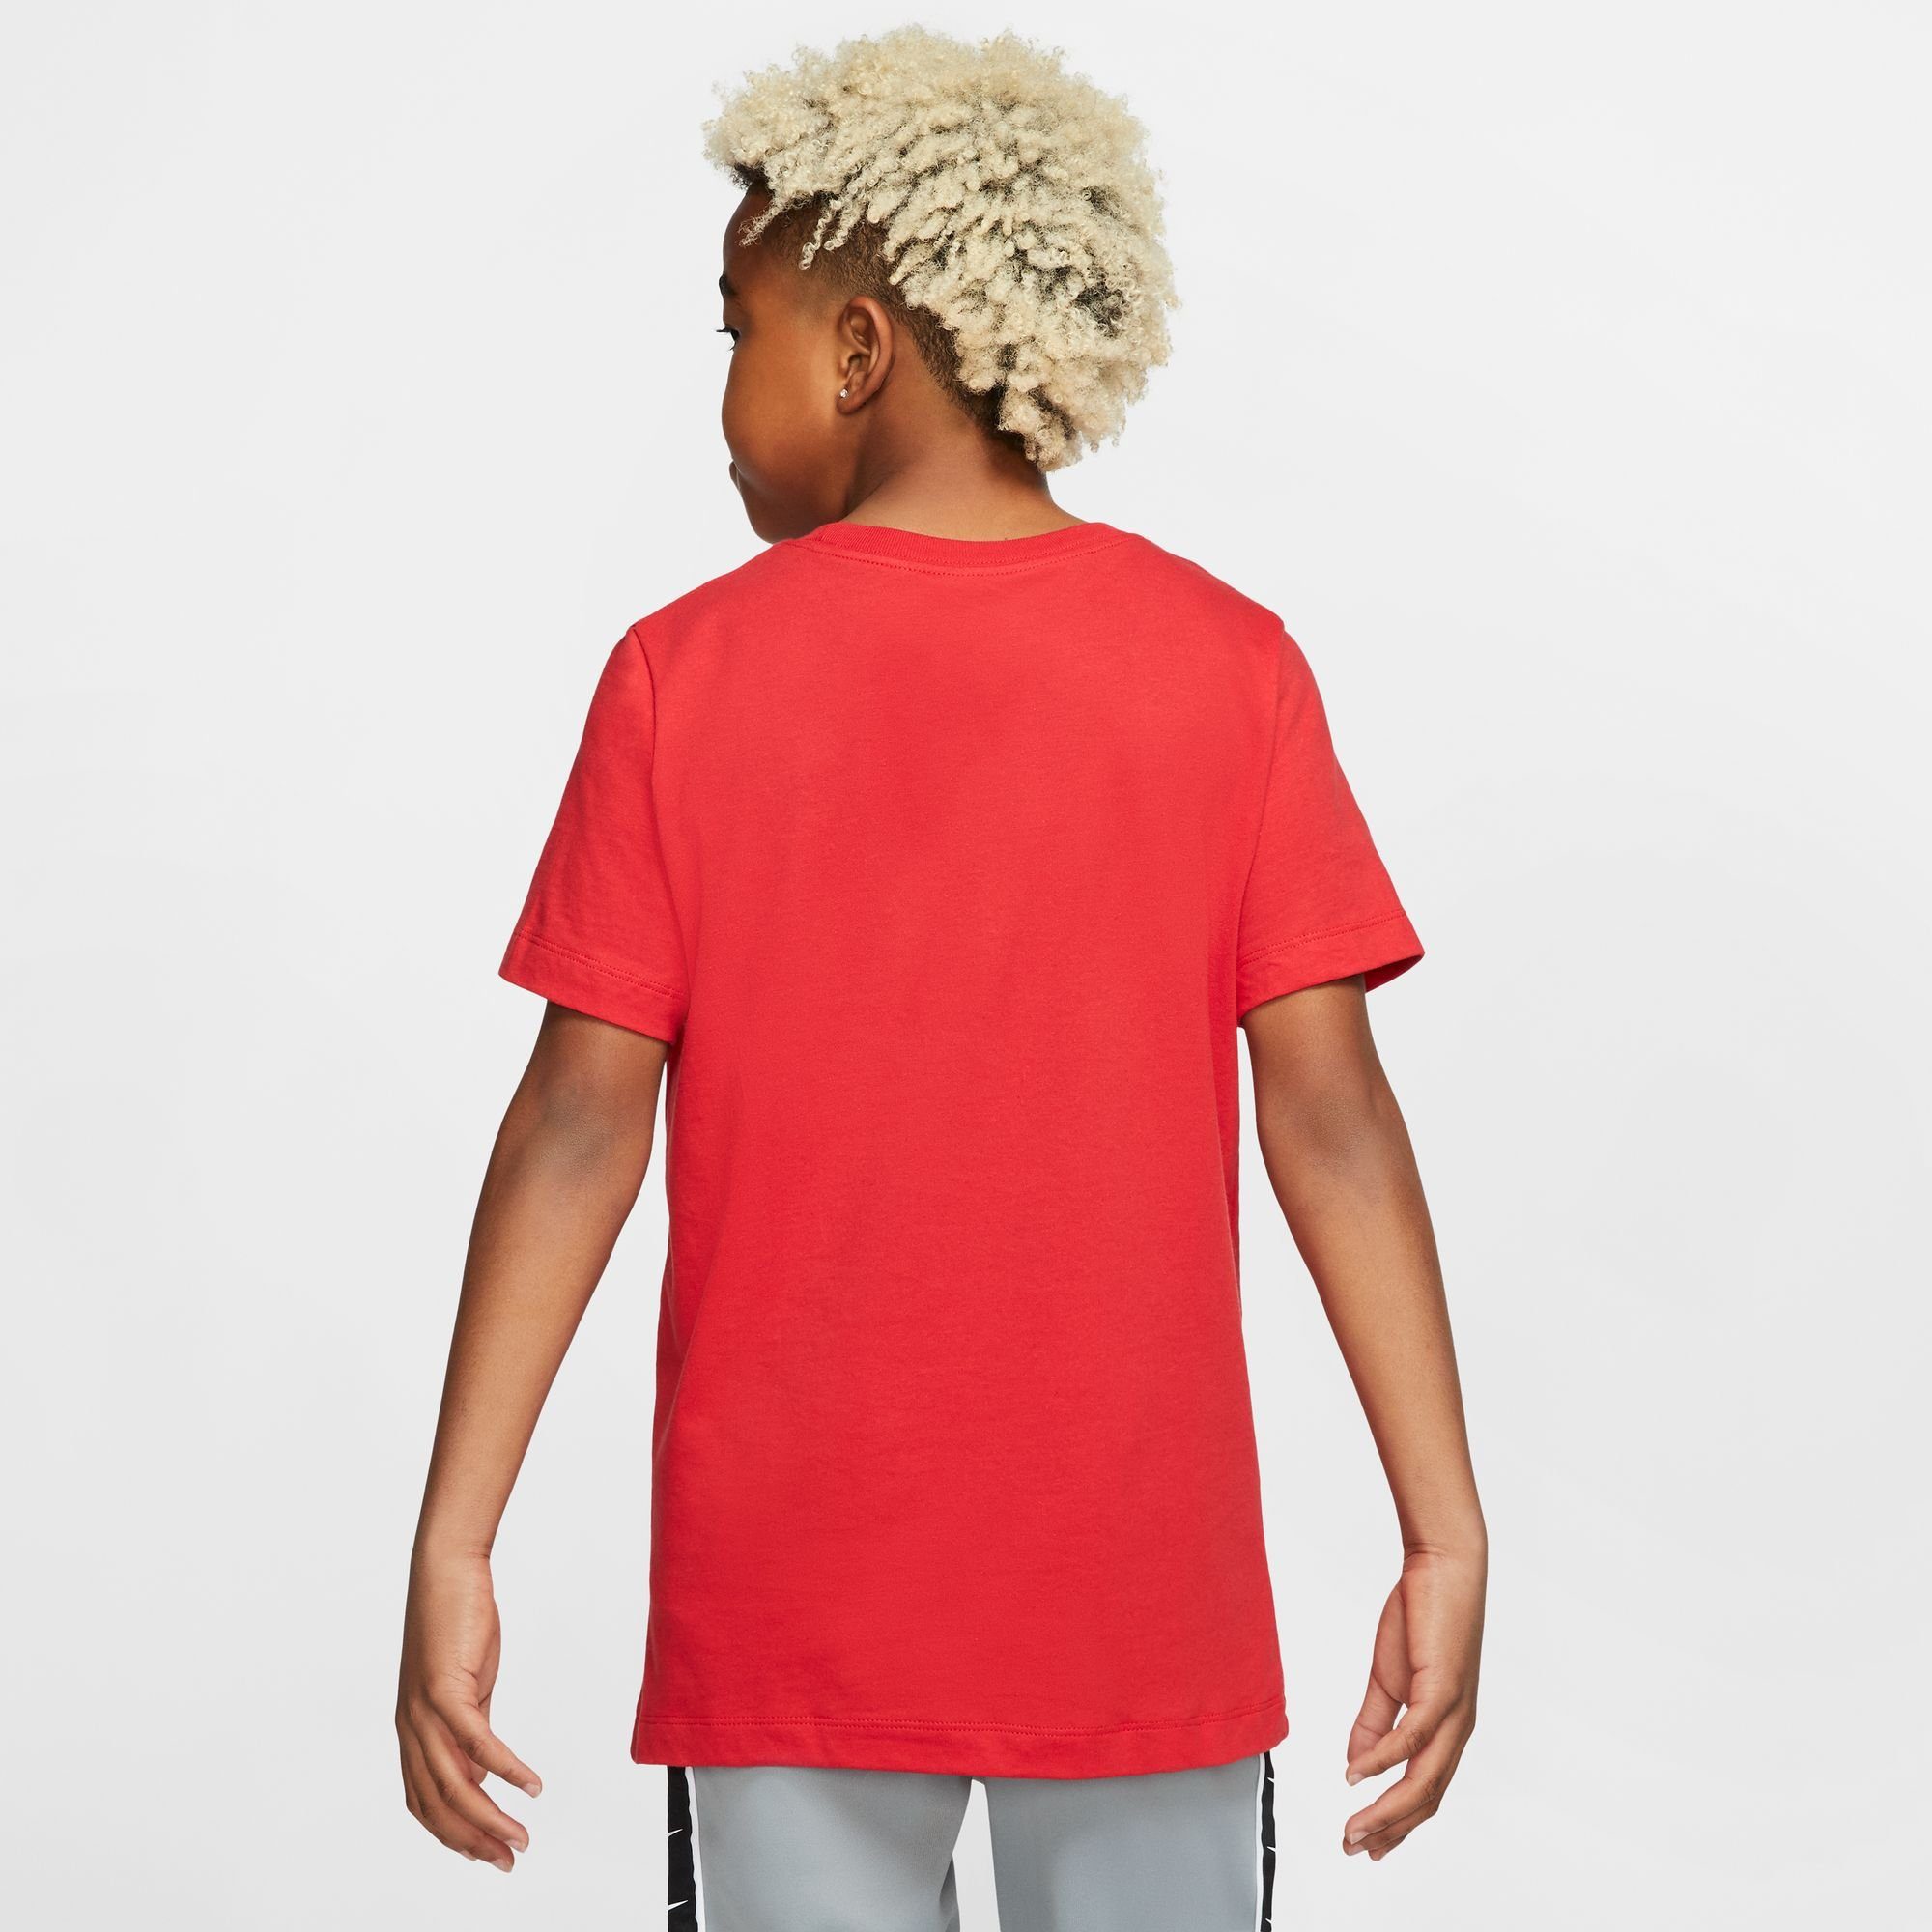 RED/BLACK UNIVERSITY Sportswear T-SHIRT Nike KIDS' COTTON T-Shirt BIG